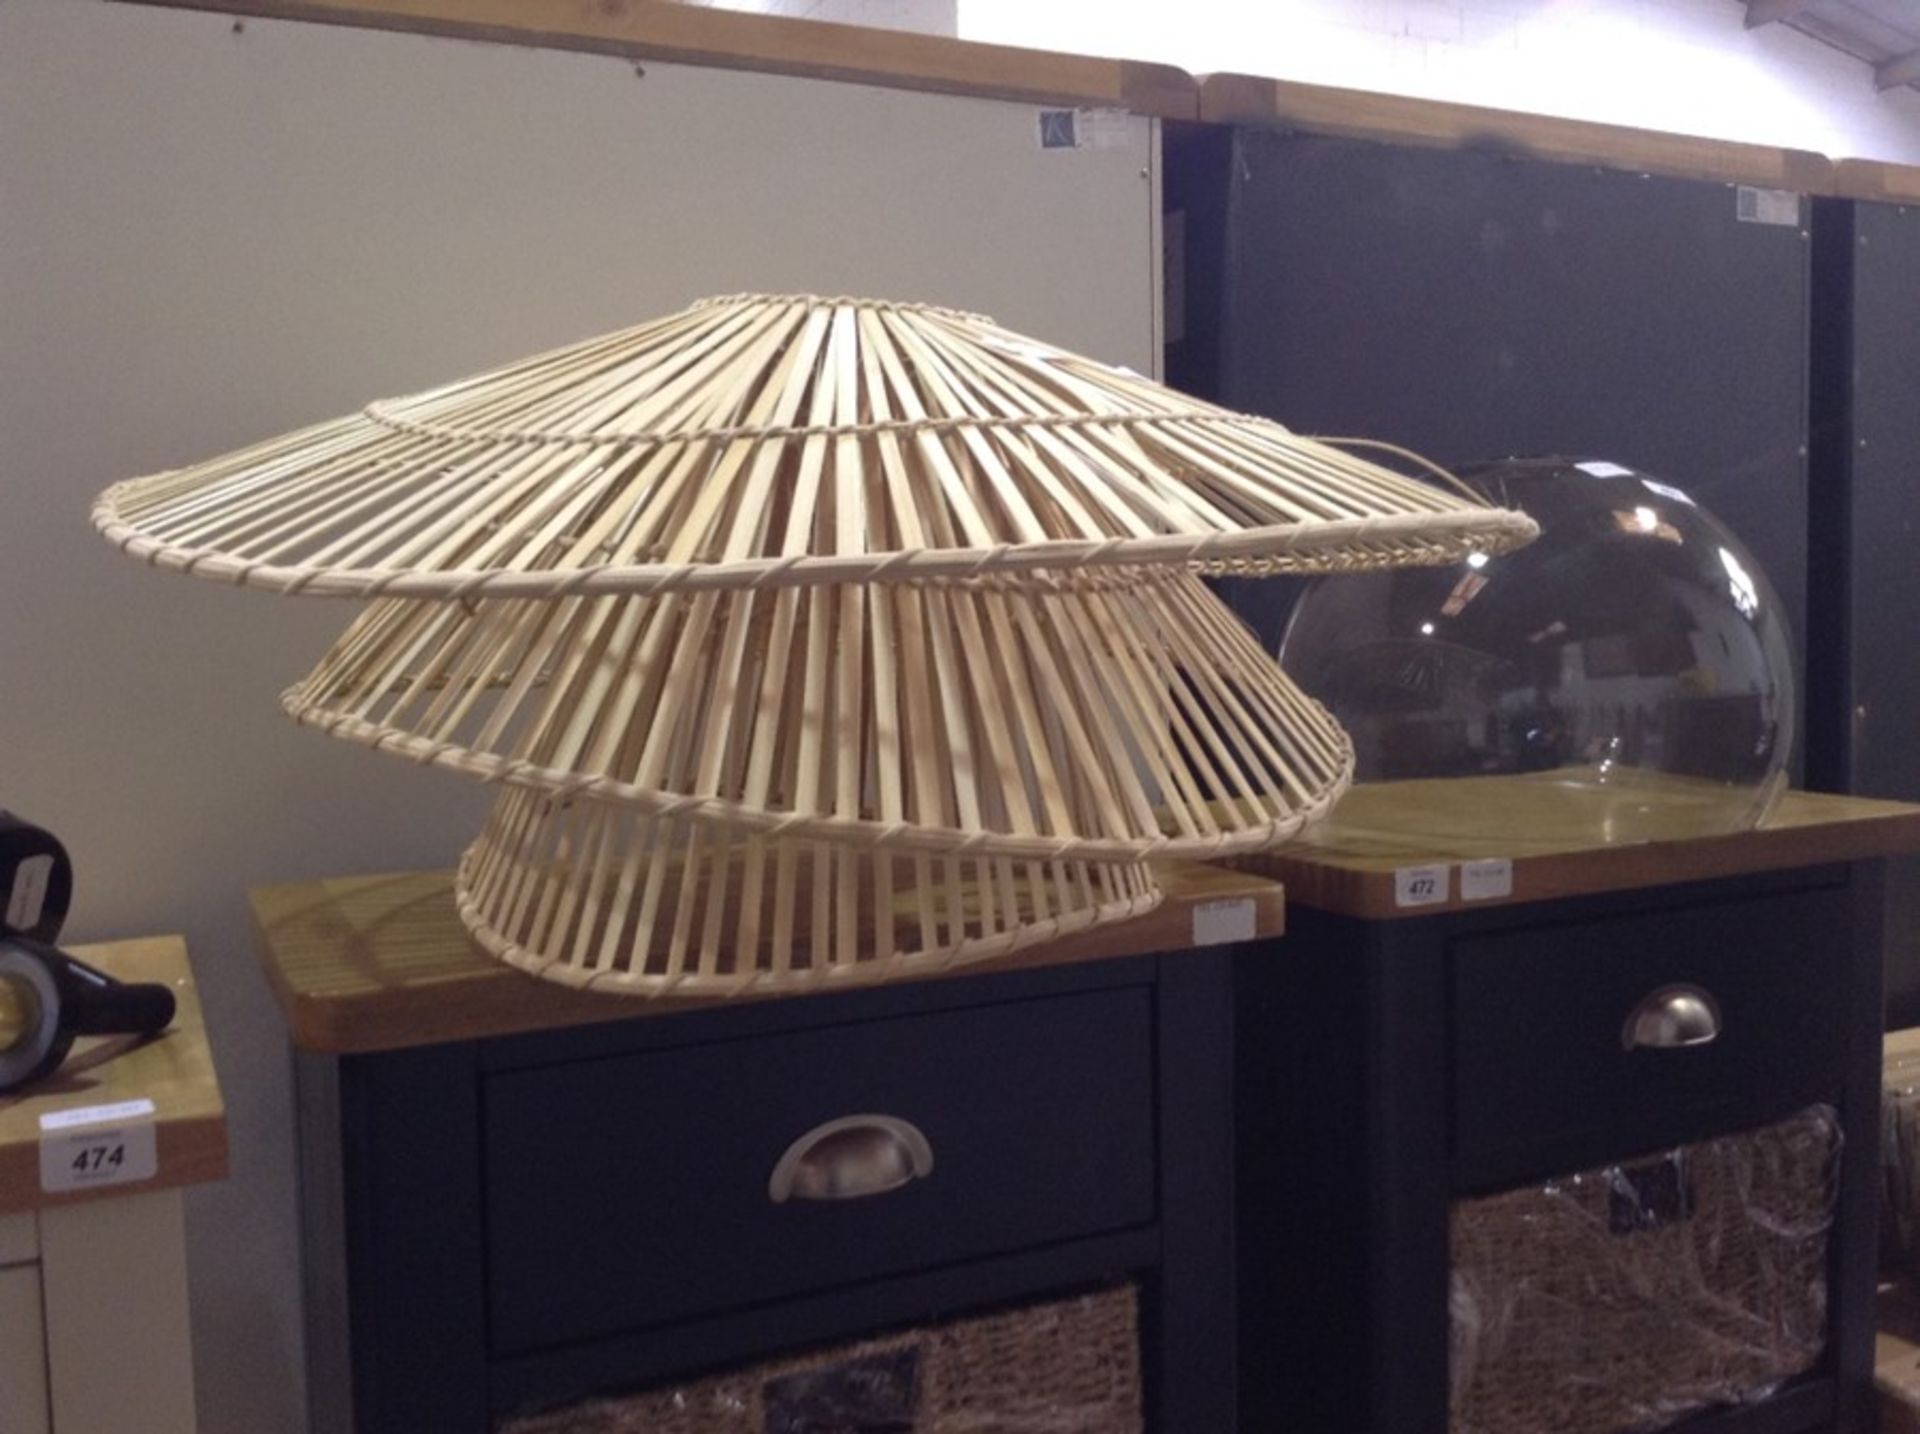 |1X|Made.com Weaver Arc Overreach Lamp Shade Natural Bamboo |1j0477/11-FLPWEA004NAT-UK1|